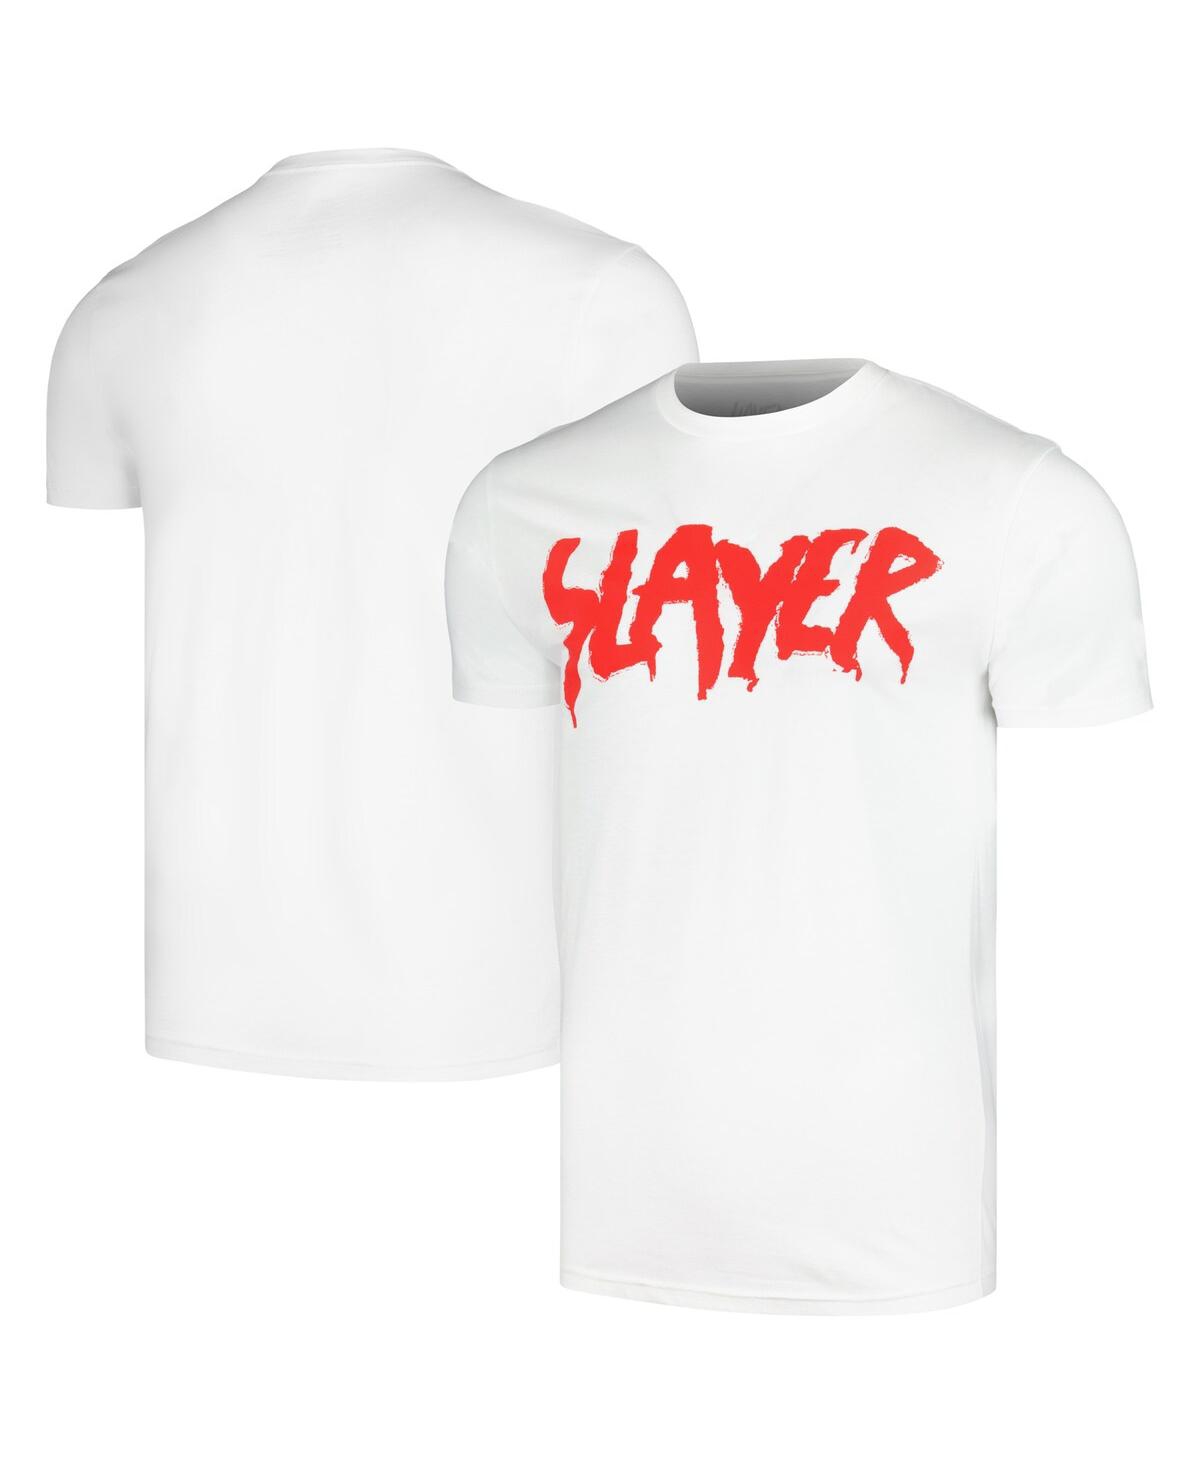 Shop Global Merch Men's White Slayer Drip Logo T-shirt